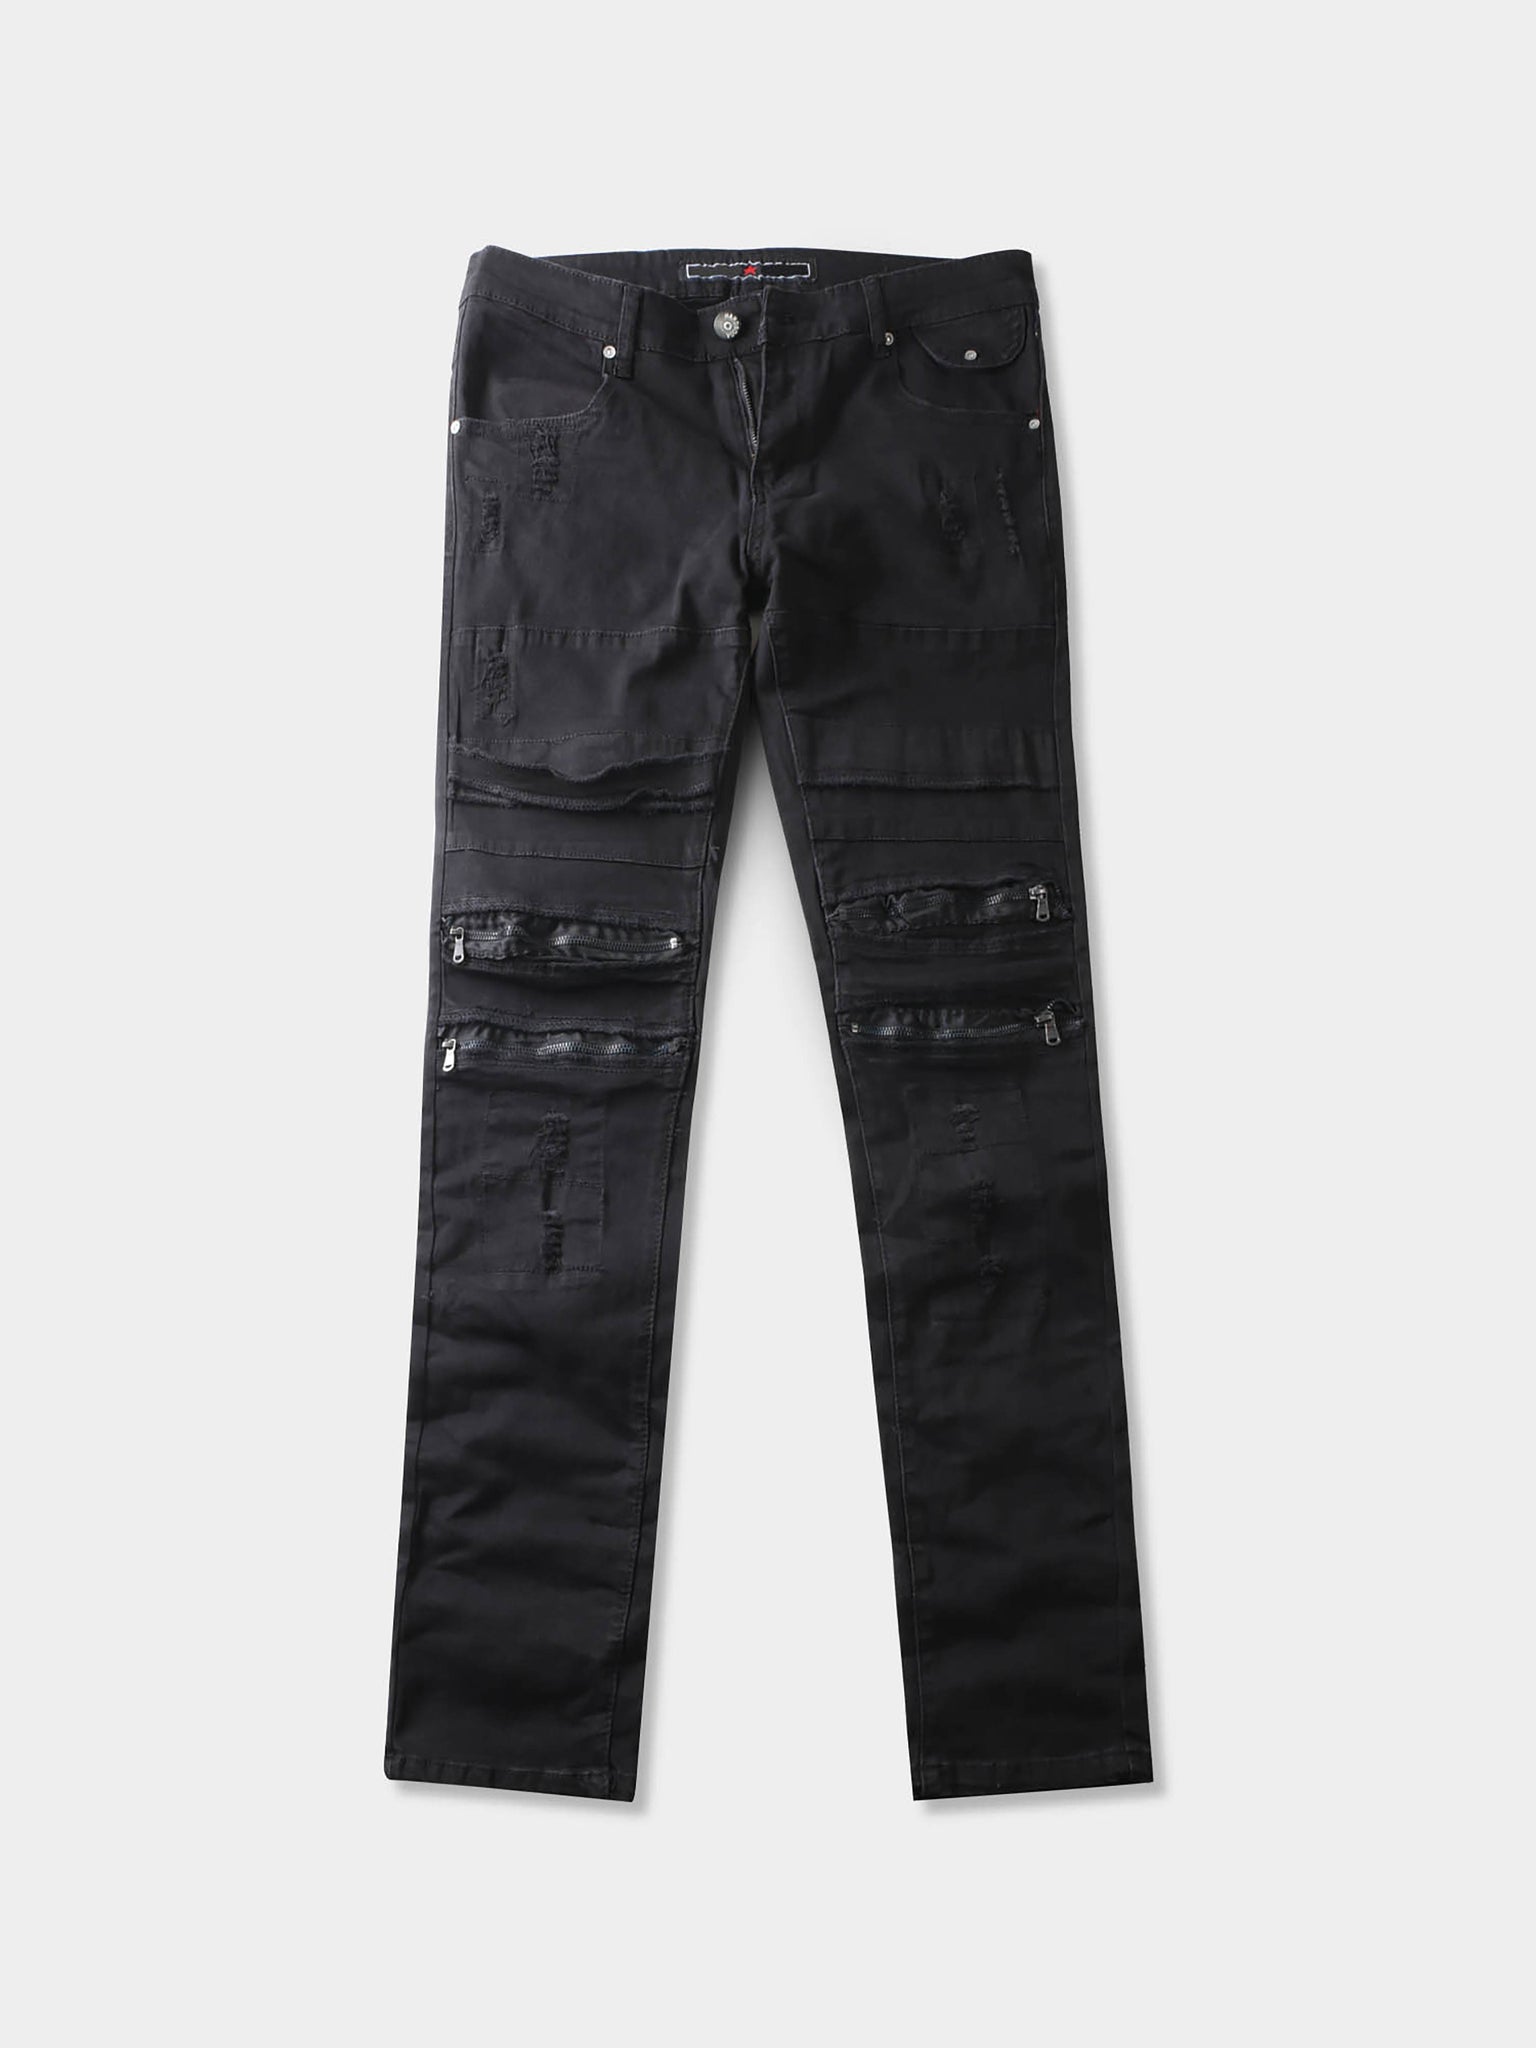 Men's Distressed Zipper Biker Jeans